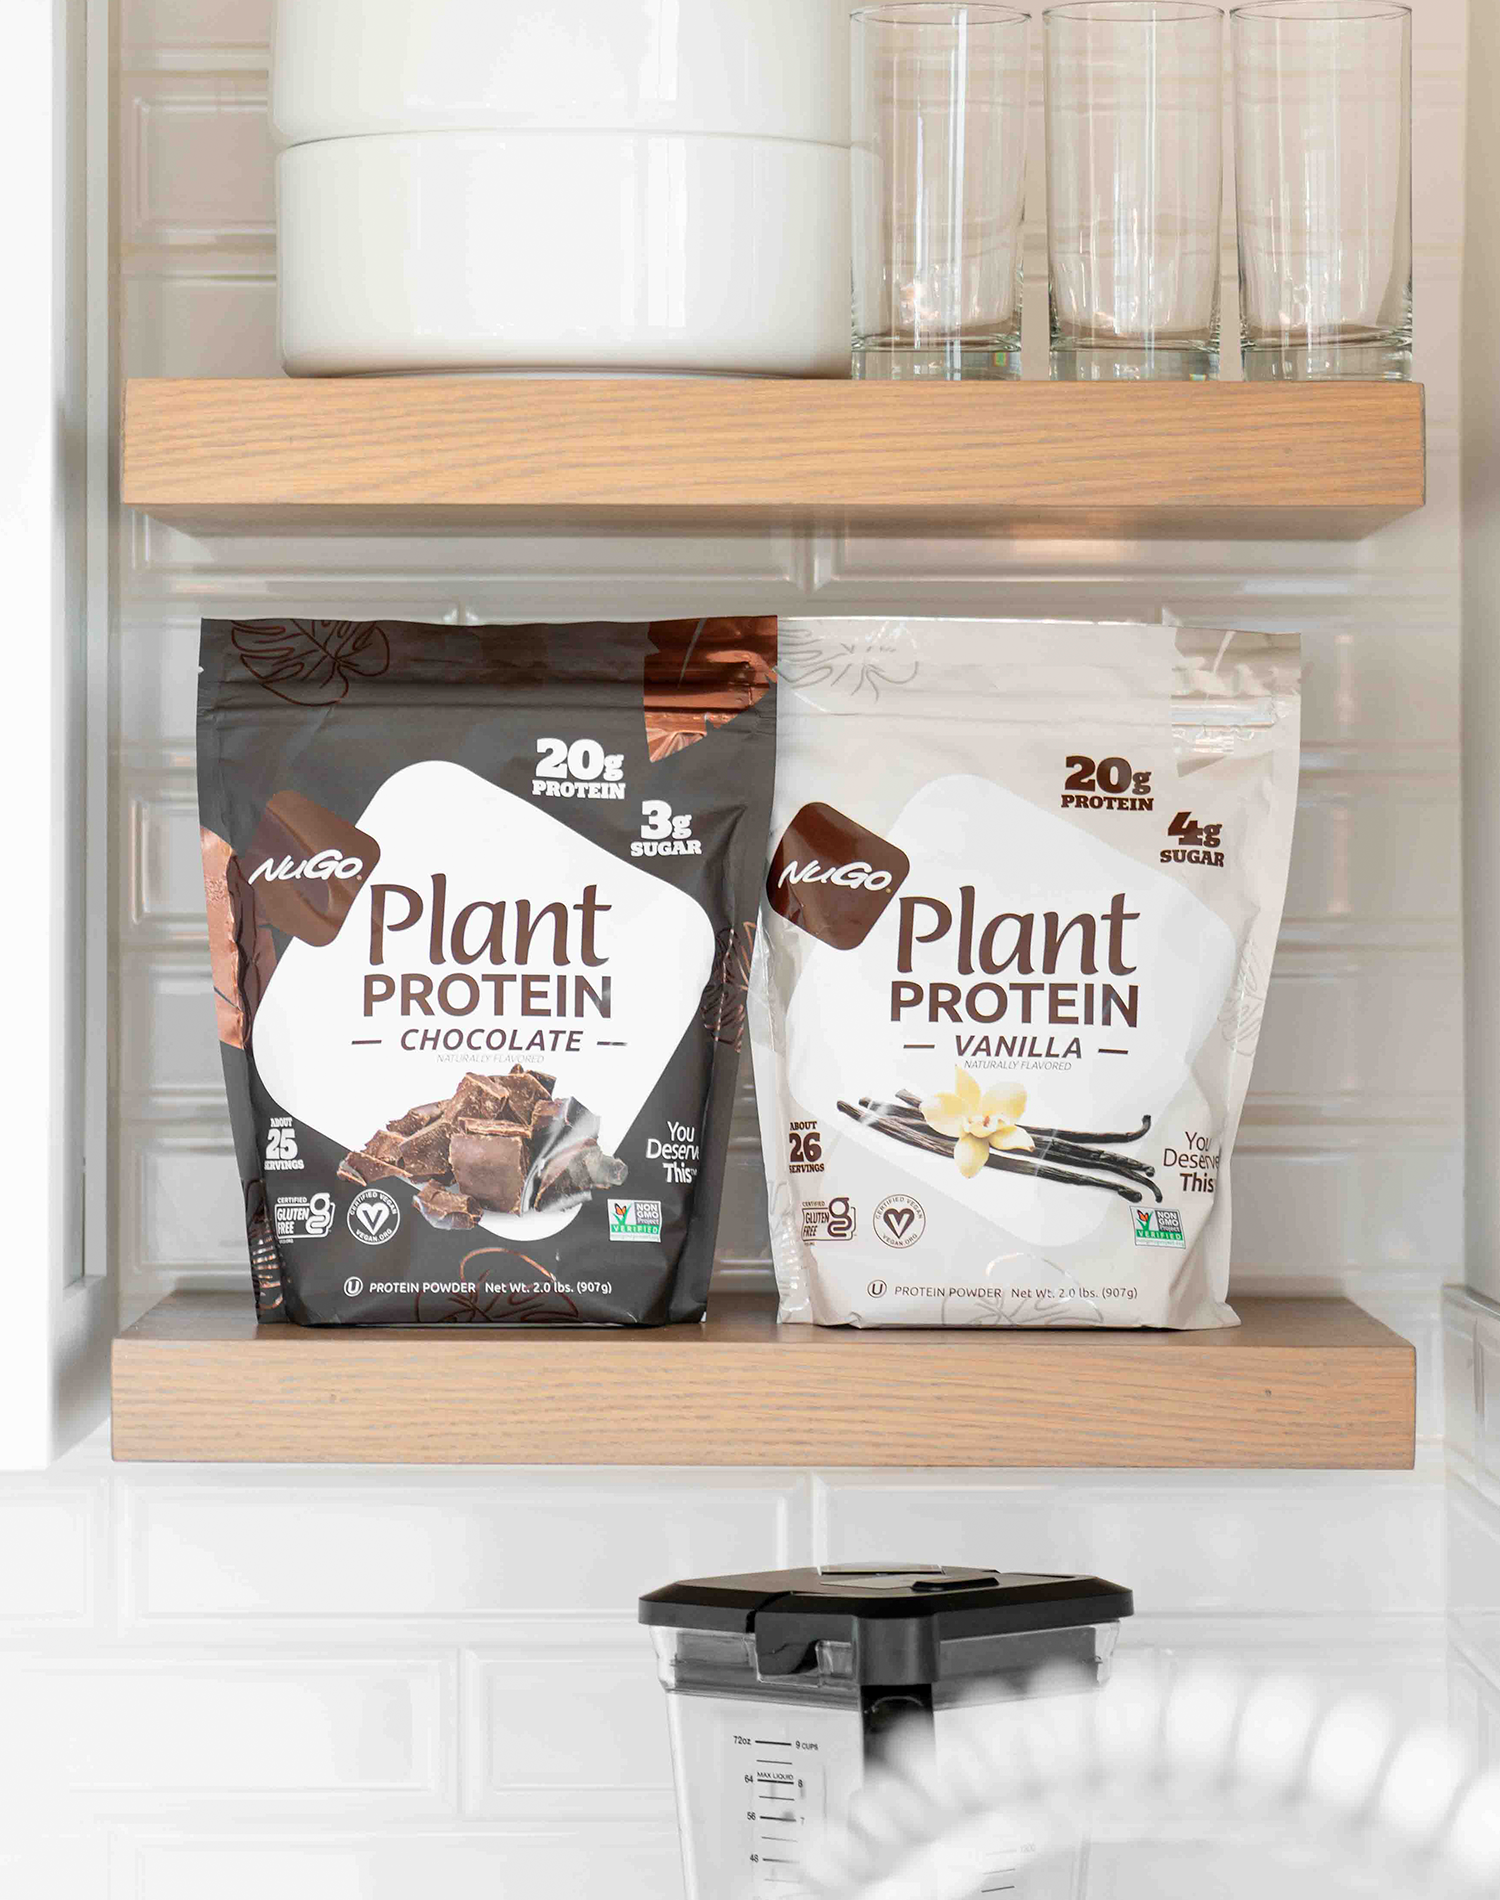 Chocolate and Vanilla Protein Powder on Shelf